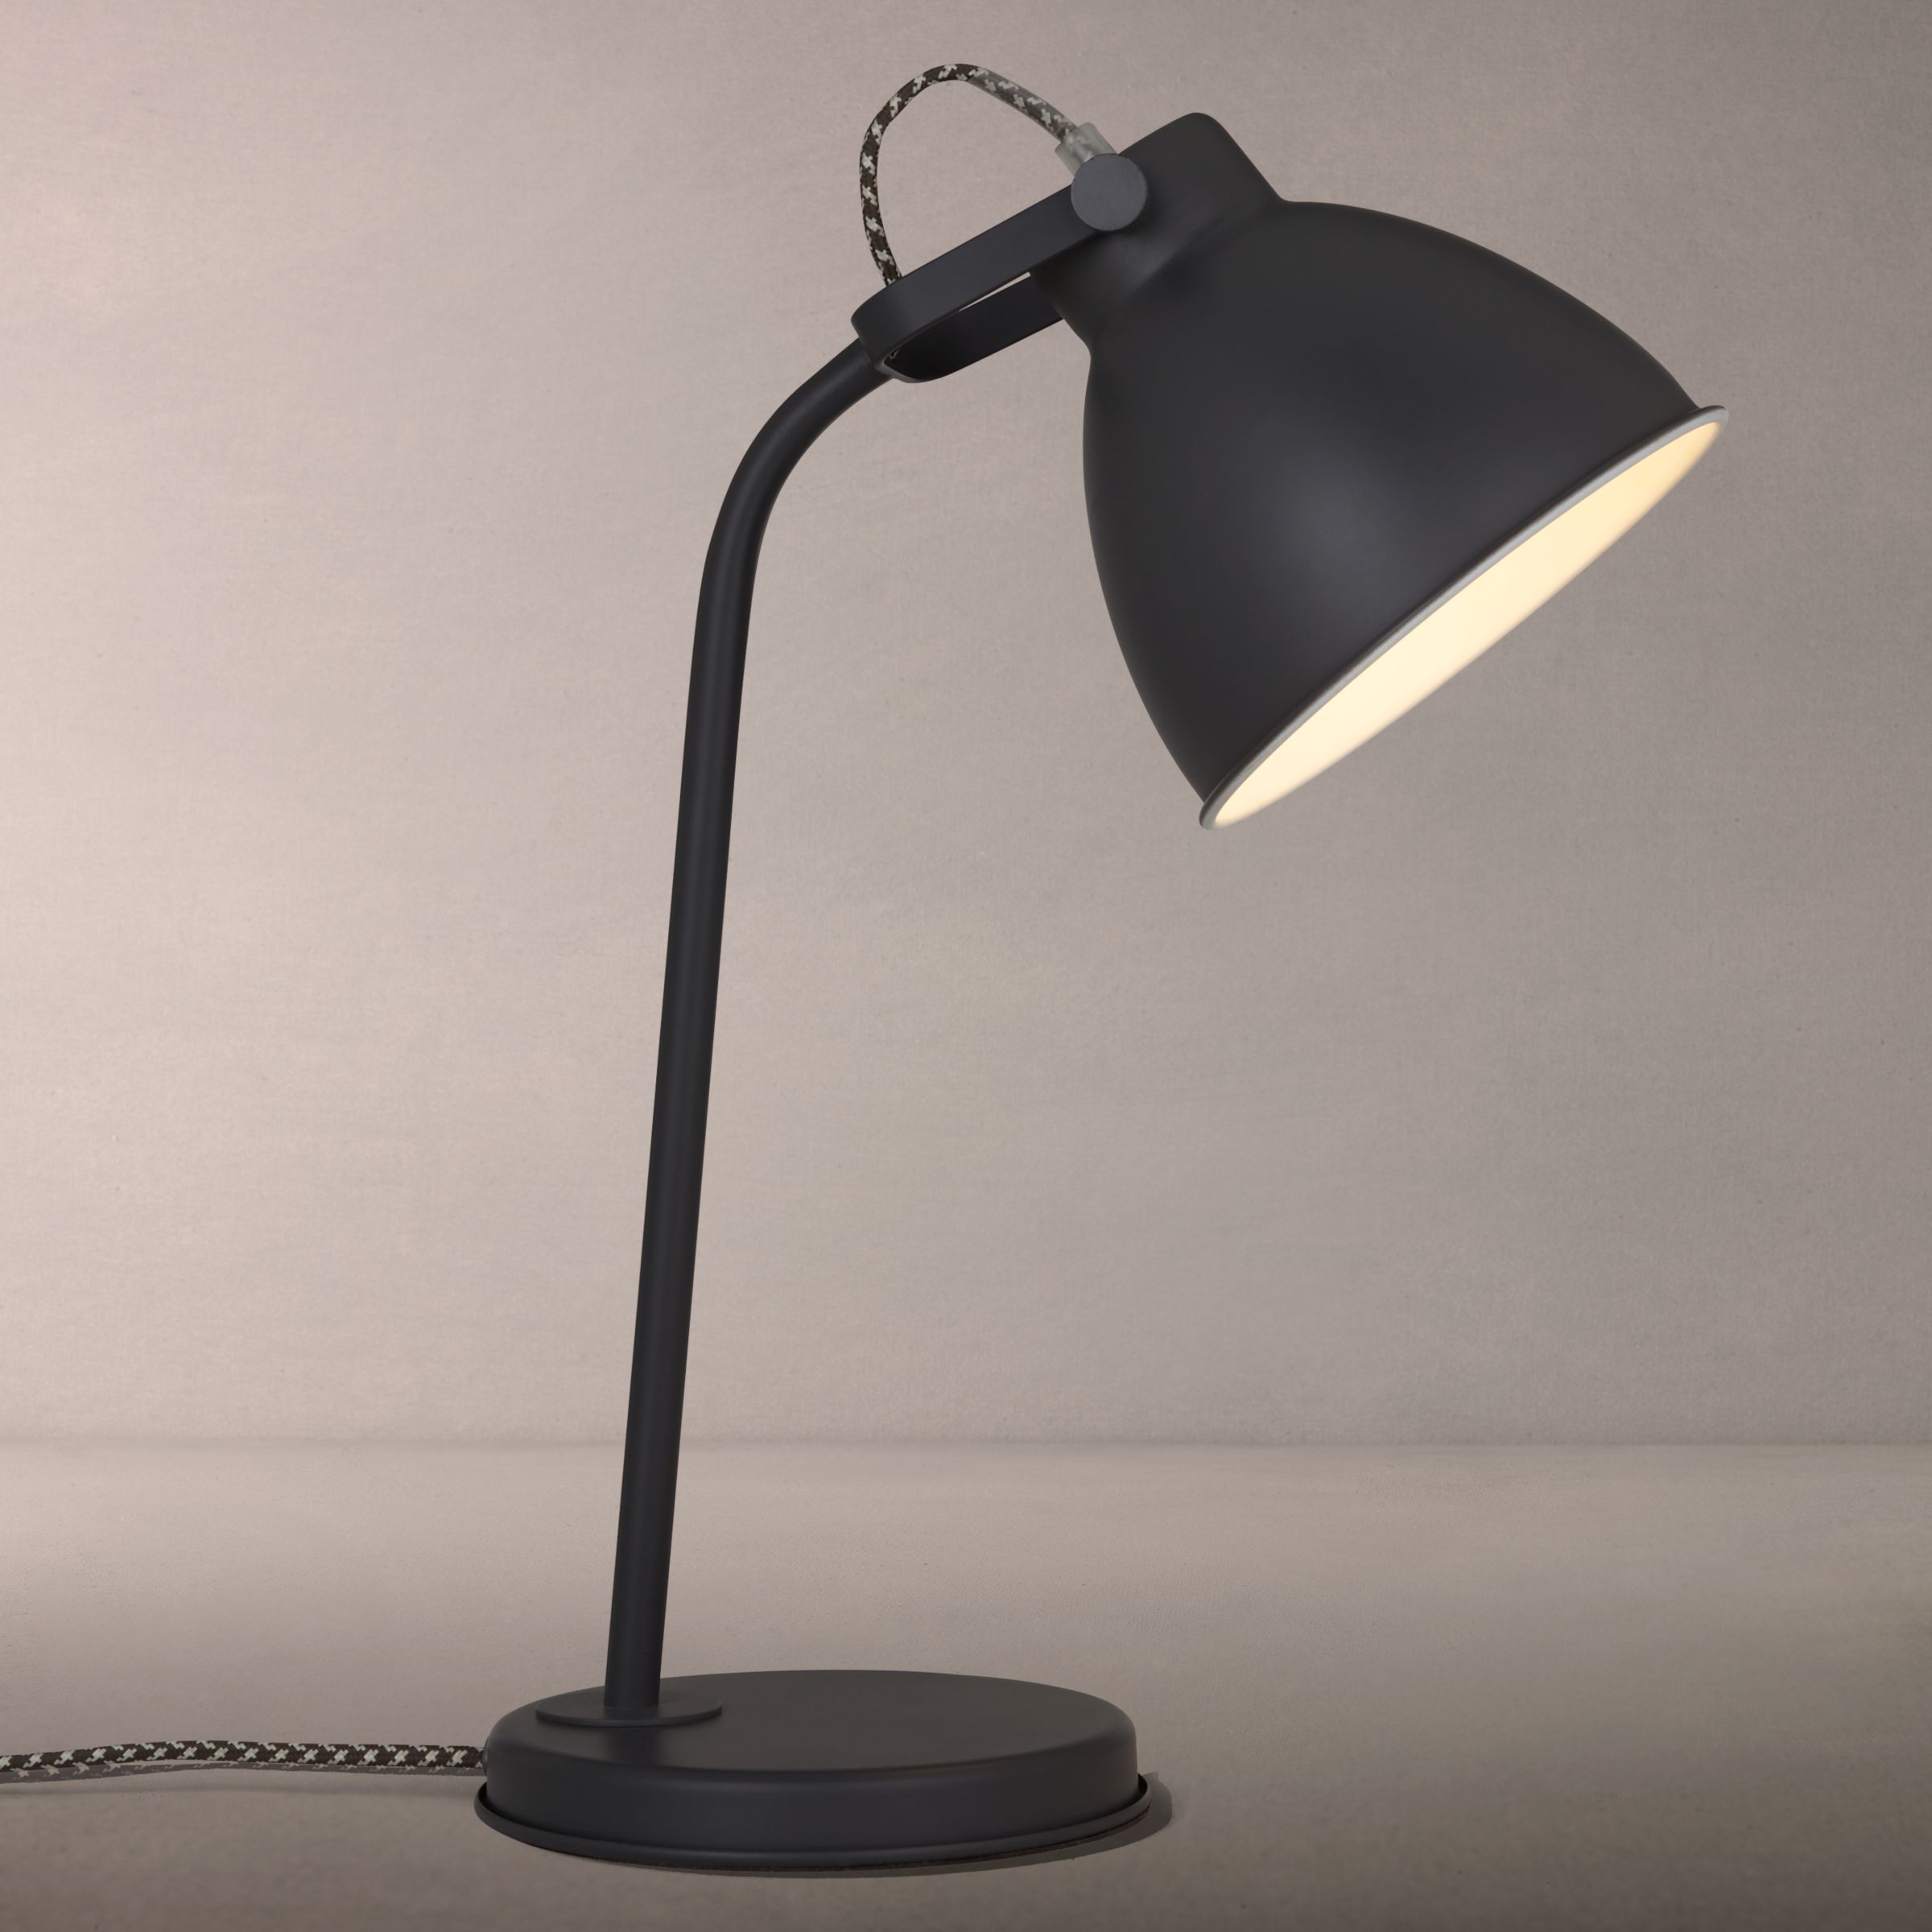 John Lewis & Partners Norton Desk Lamp